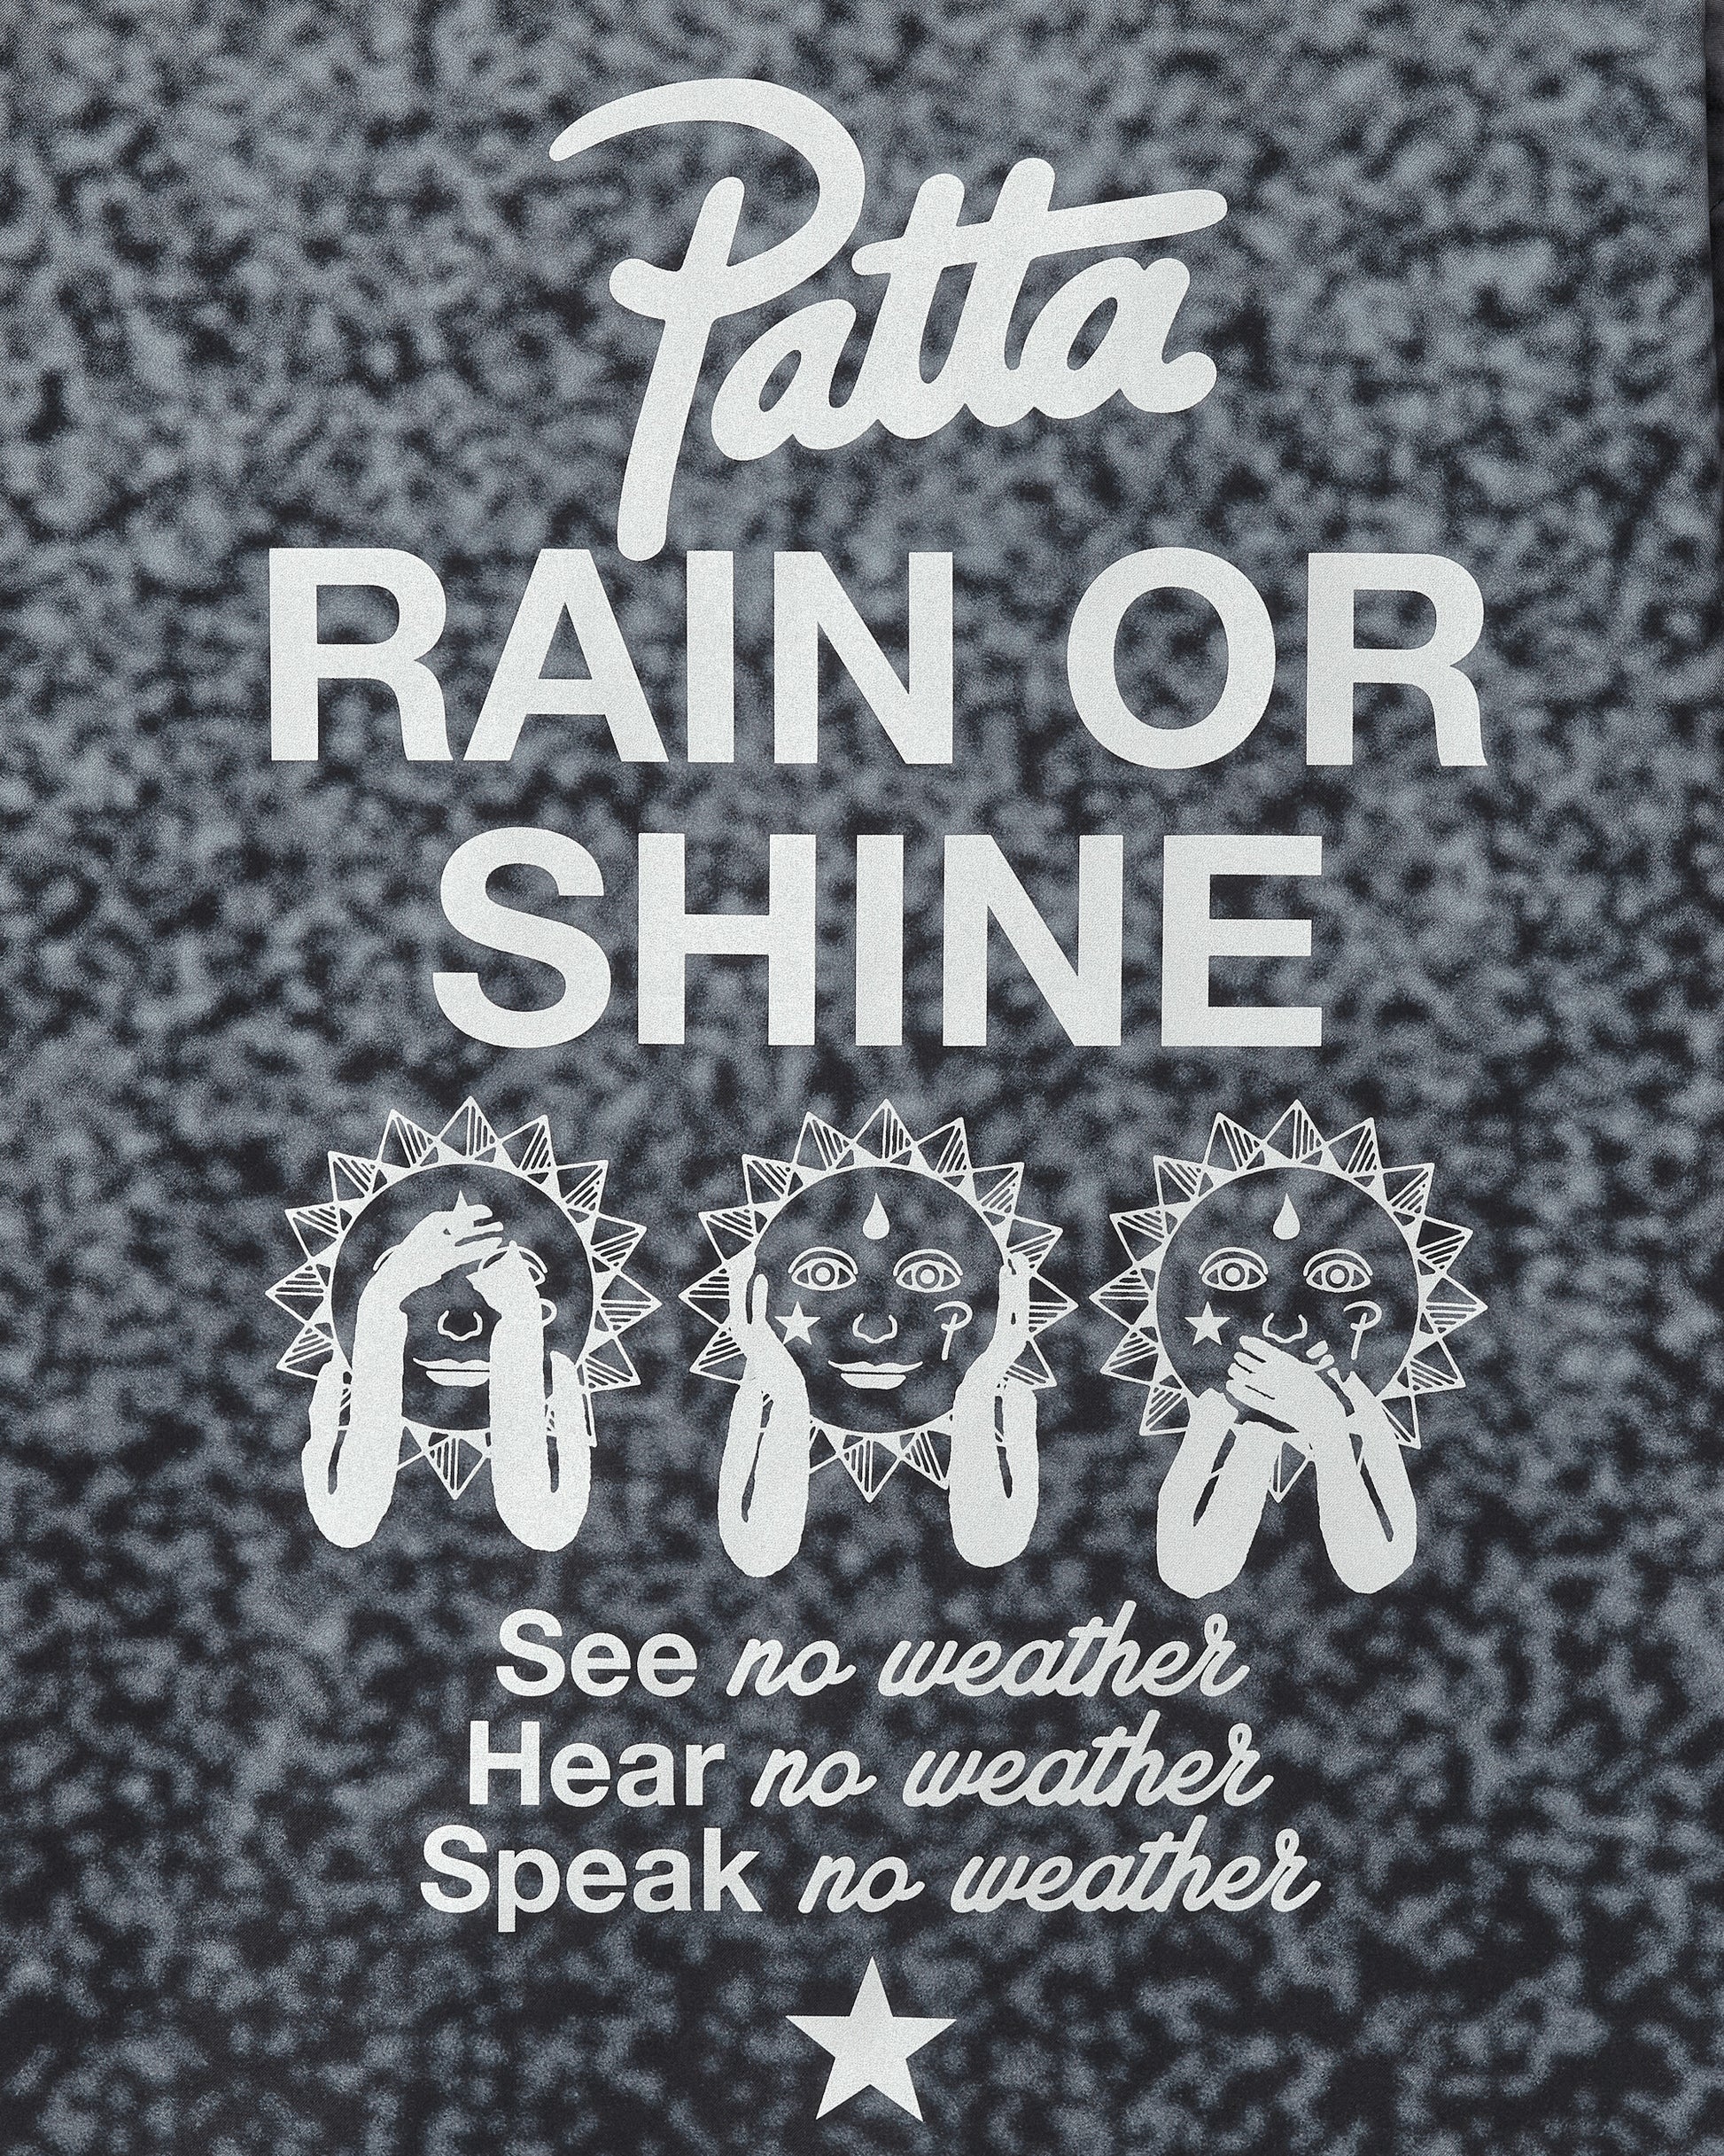 Converse Patta Rain Jacket Black Gradient Sweatshirts Zip-Ups 10026927-A01